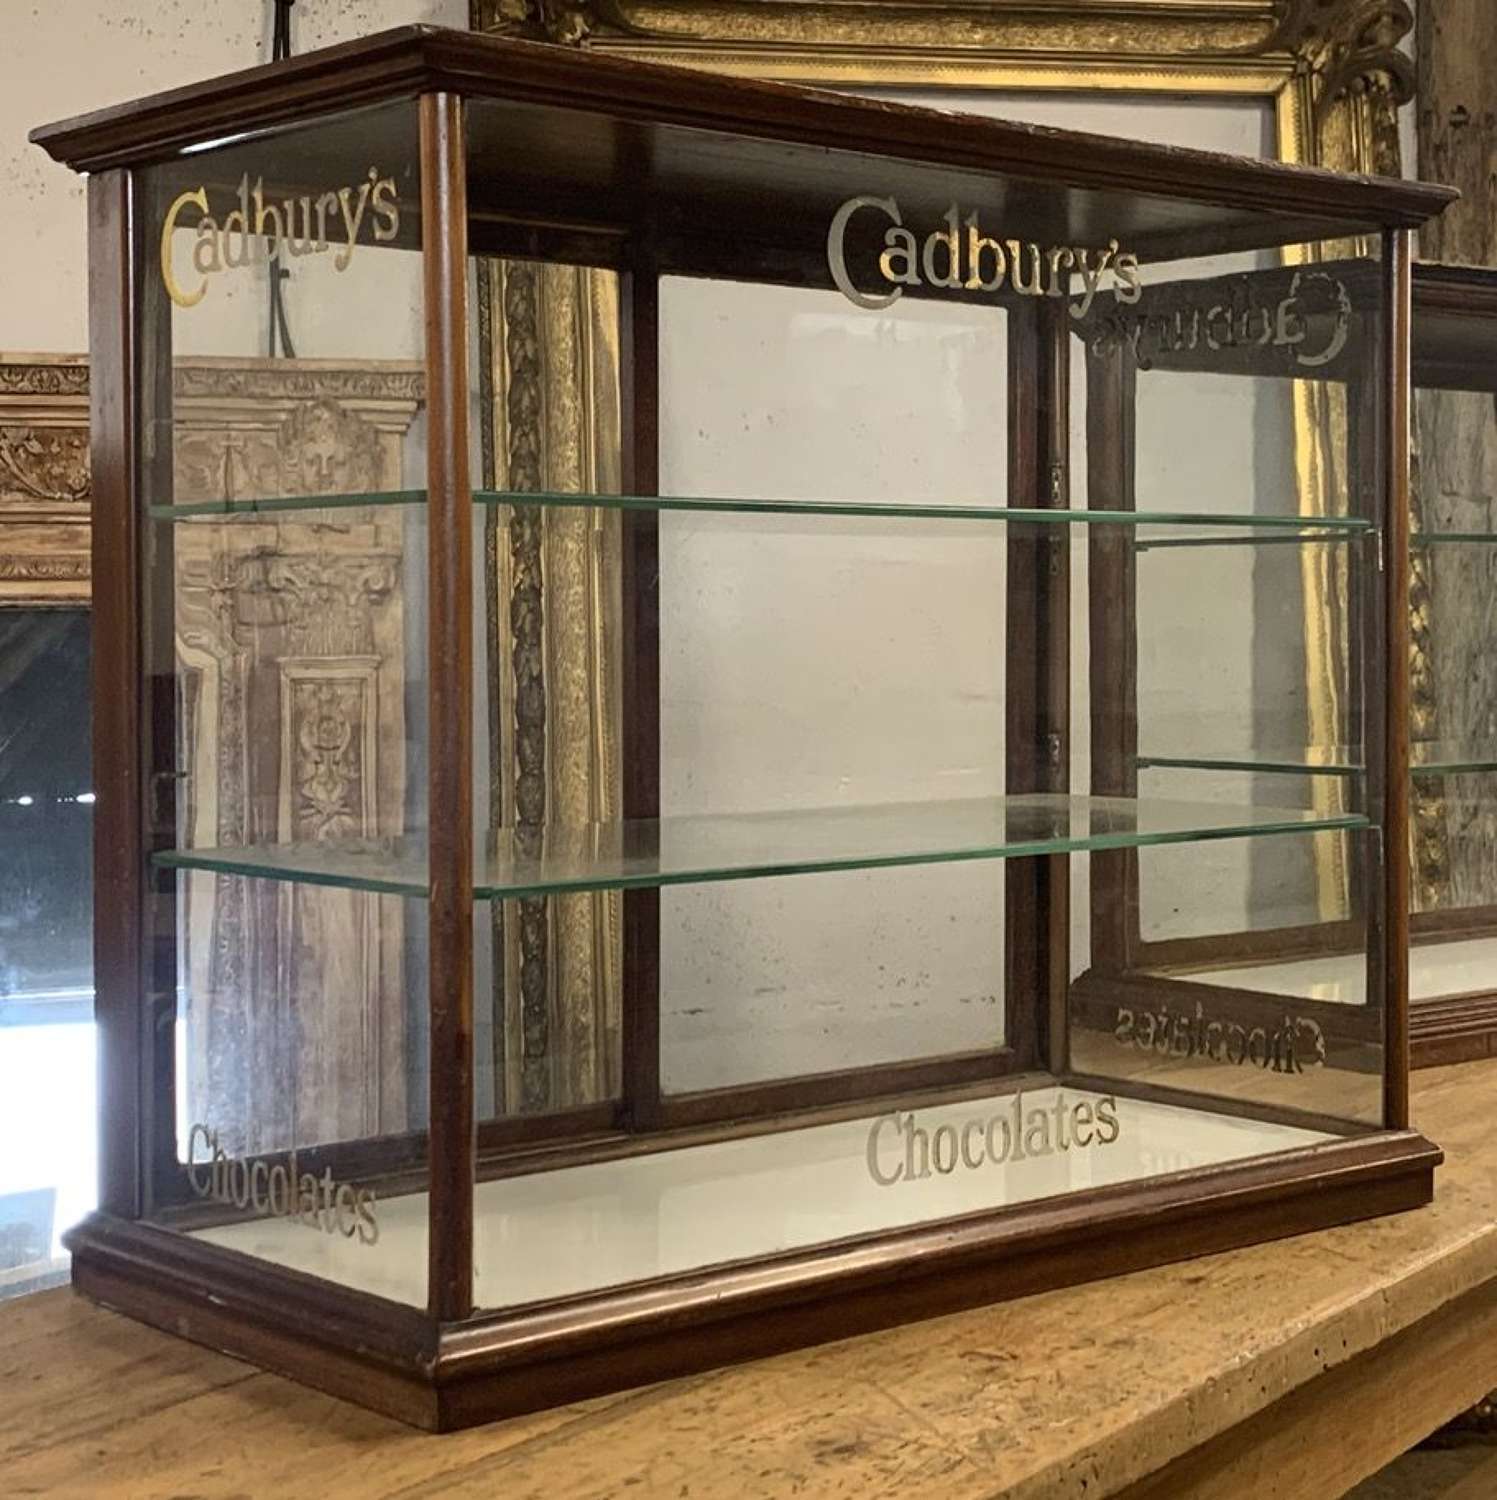 EDWARDIAN CADBURY'S CHOCOLATE DISPLAY CASE